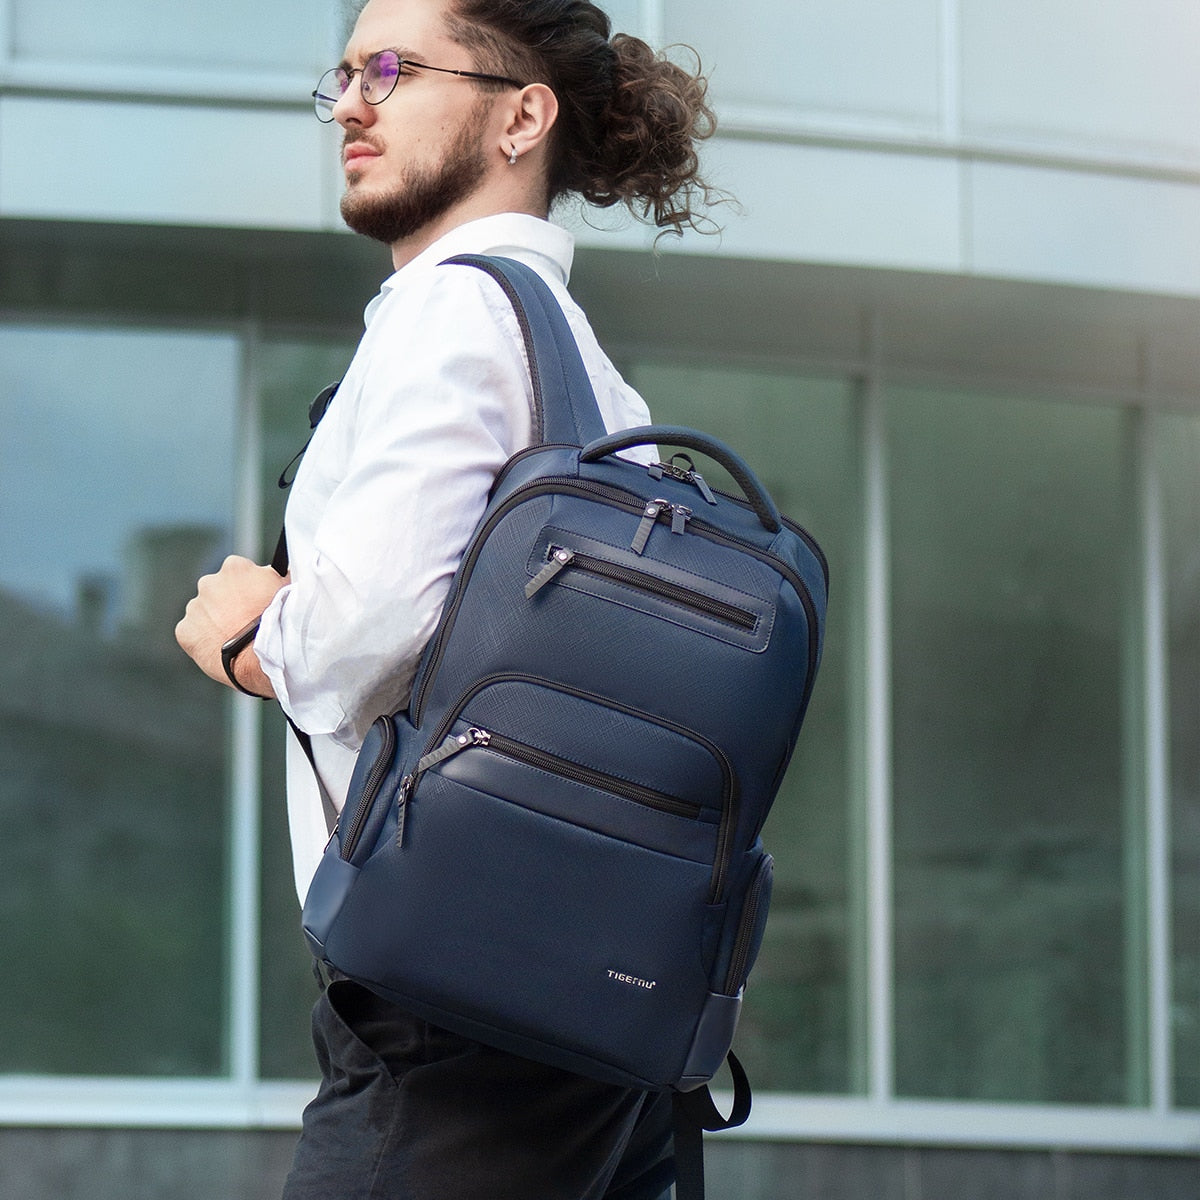 Lifetime Warranty Men Backpack Bag 15.6inch Laptop Backpack Waterproof College Schoolbag Travel Bag Business Bags Connect Series - kmtell.com